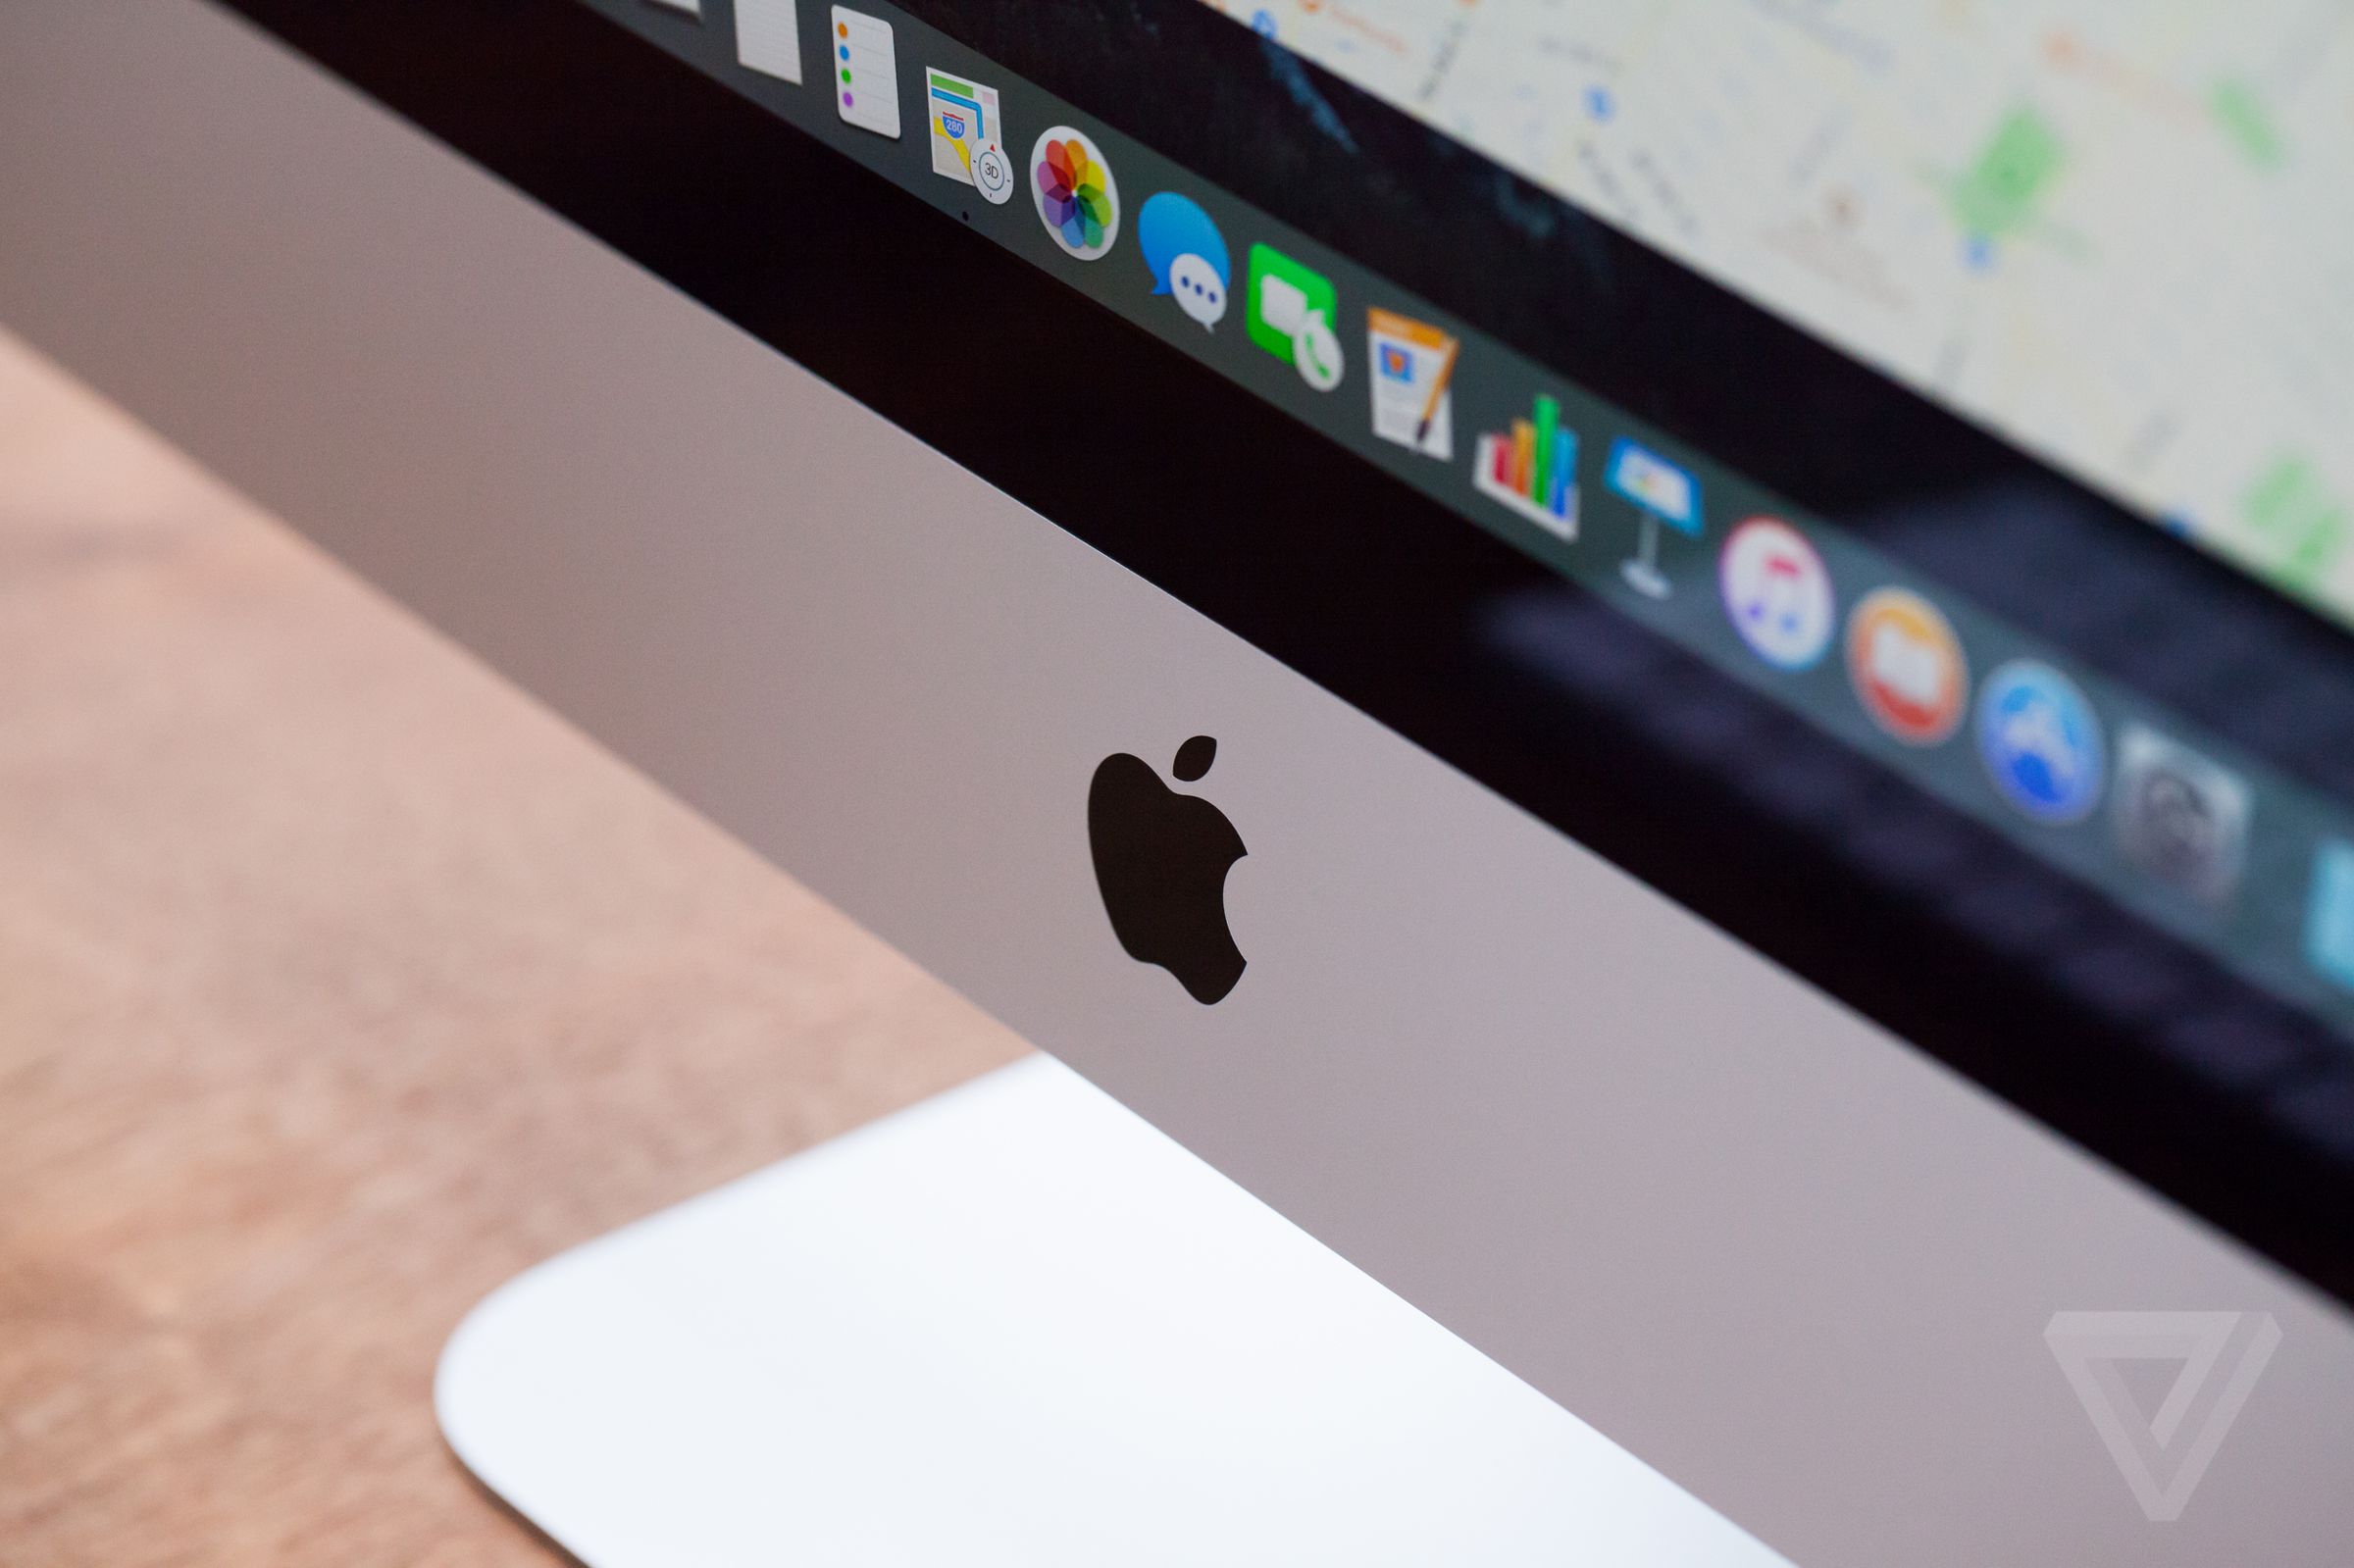 27-inch 5K iMac (2015) hands-on photos